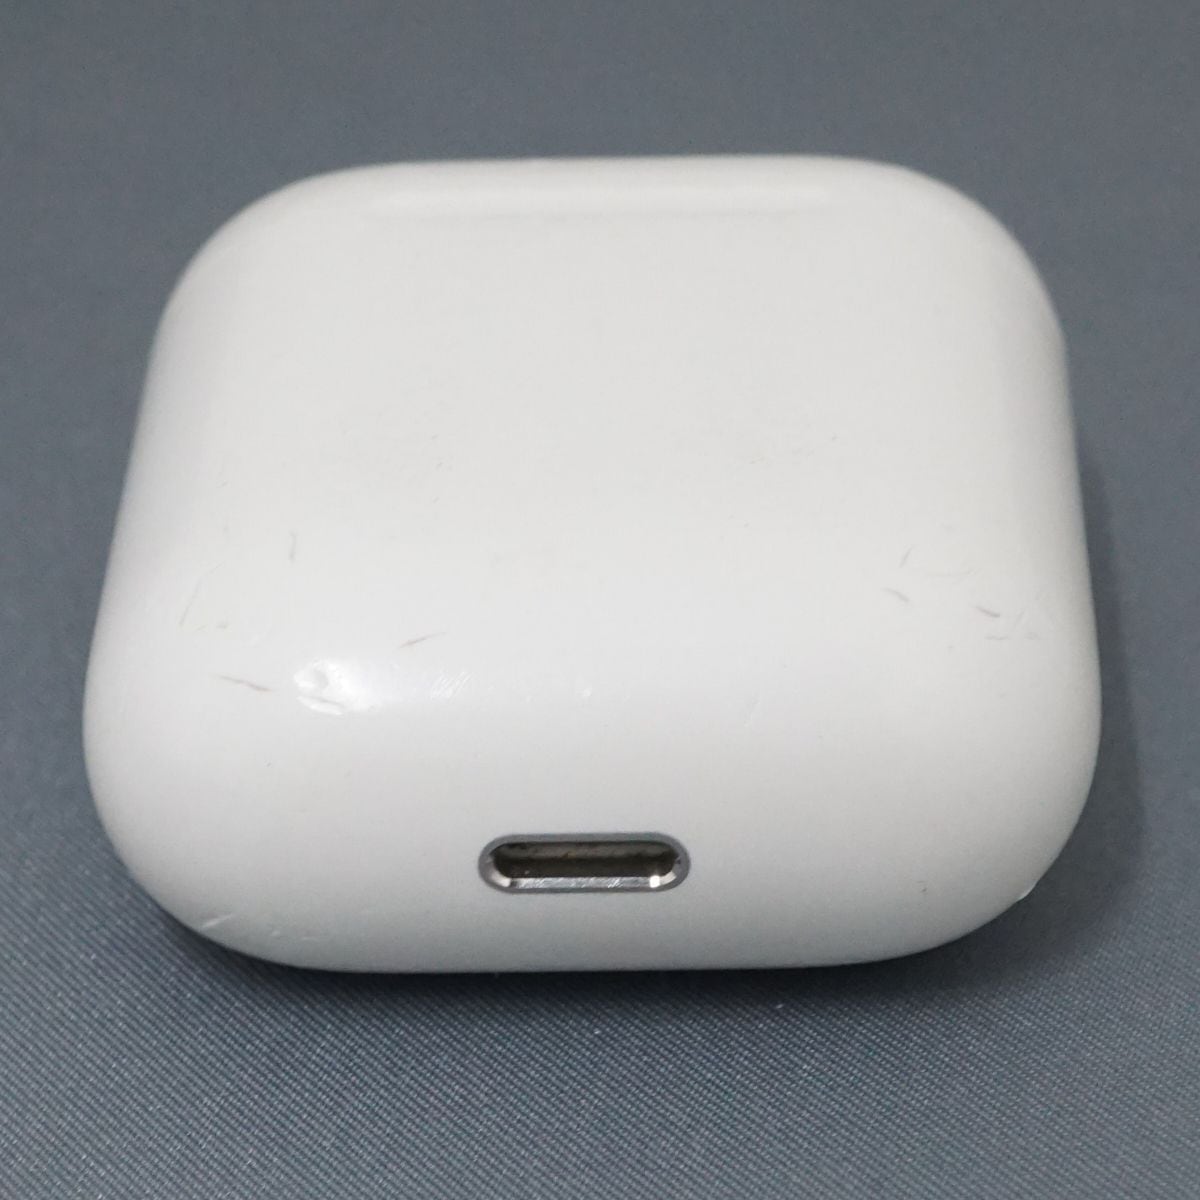 Apple AirPods エアーポッズ 充電ケースのみ 第1世代 USED品 ワイヤレスイヤホン Bluetooth対応 MMEF2J/A  A1602 正規品 純正品 完動品 即日発送 T V9360